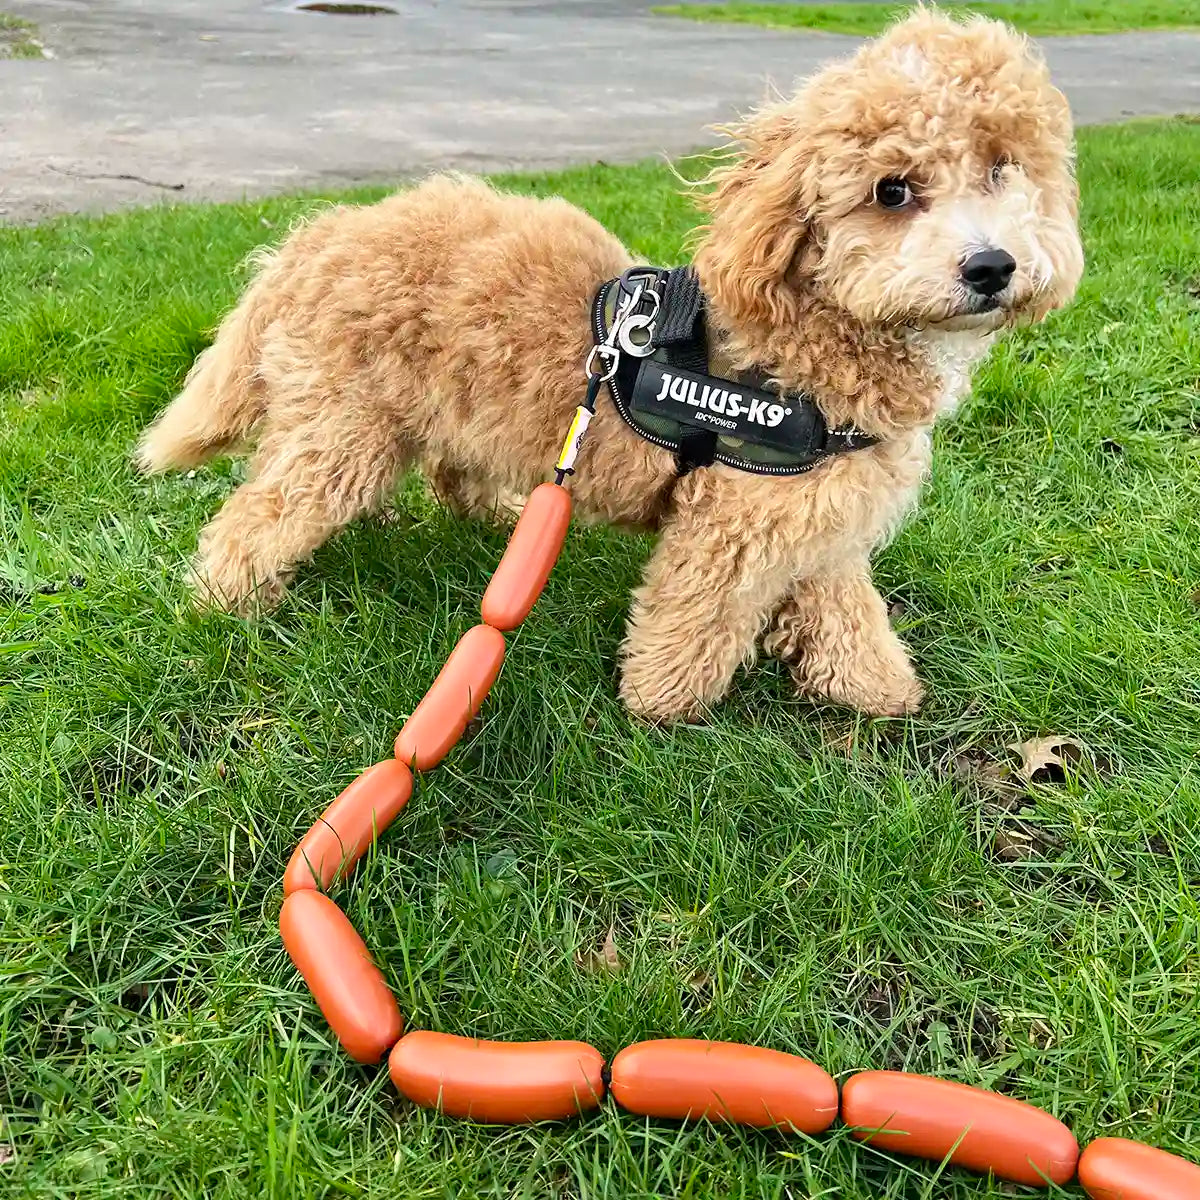 Teddy loves showing off his new gear - the hotdog sausage dog leash by 4doggo